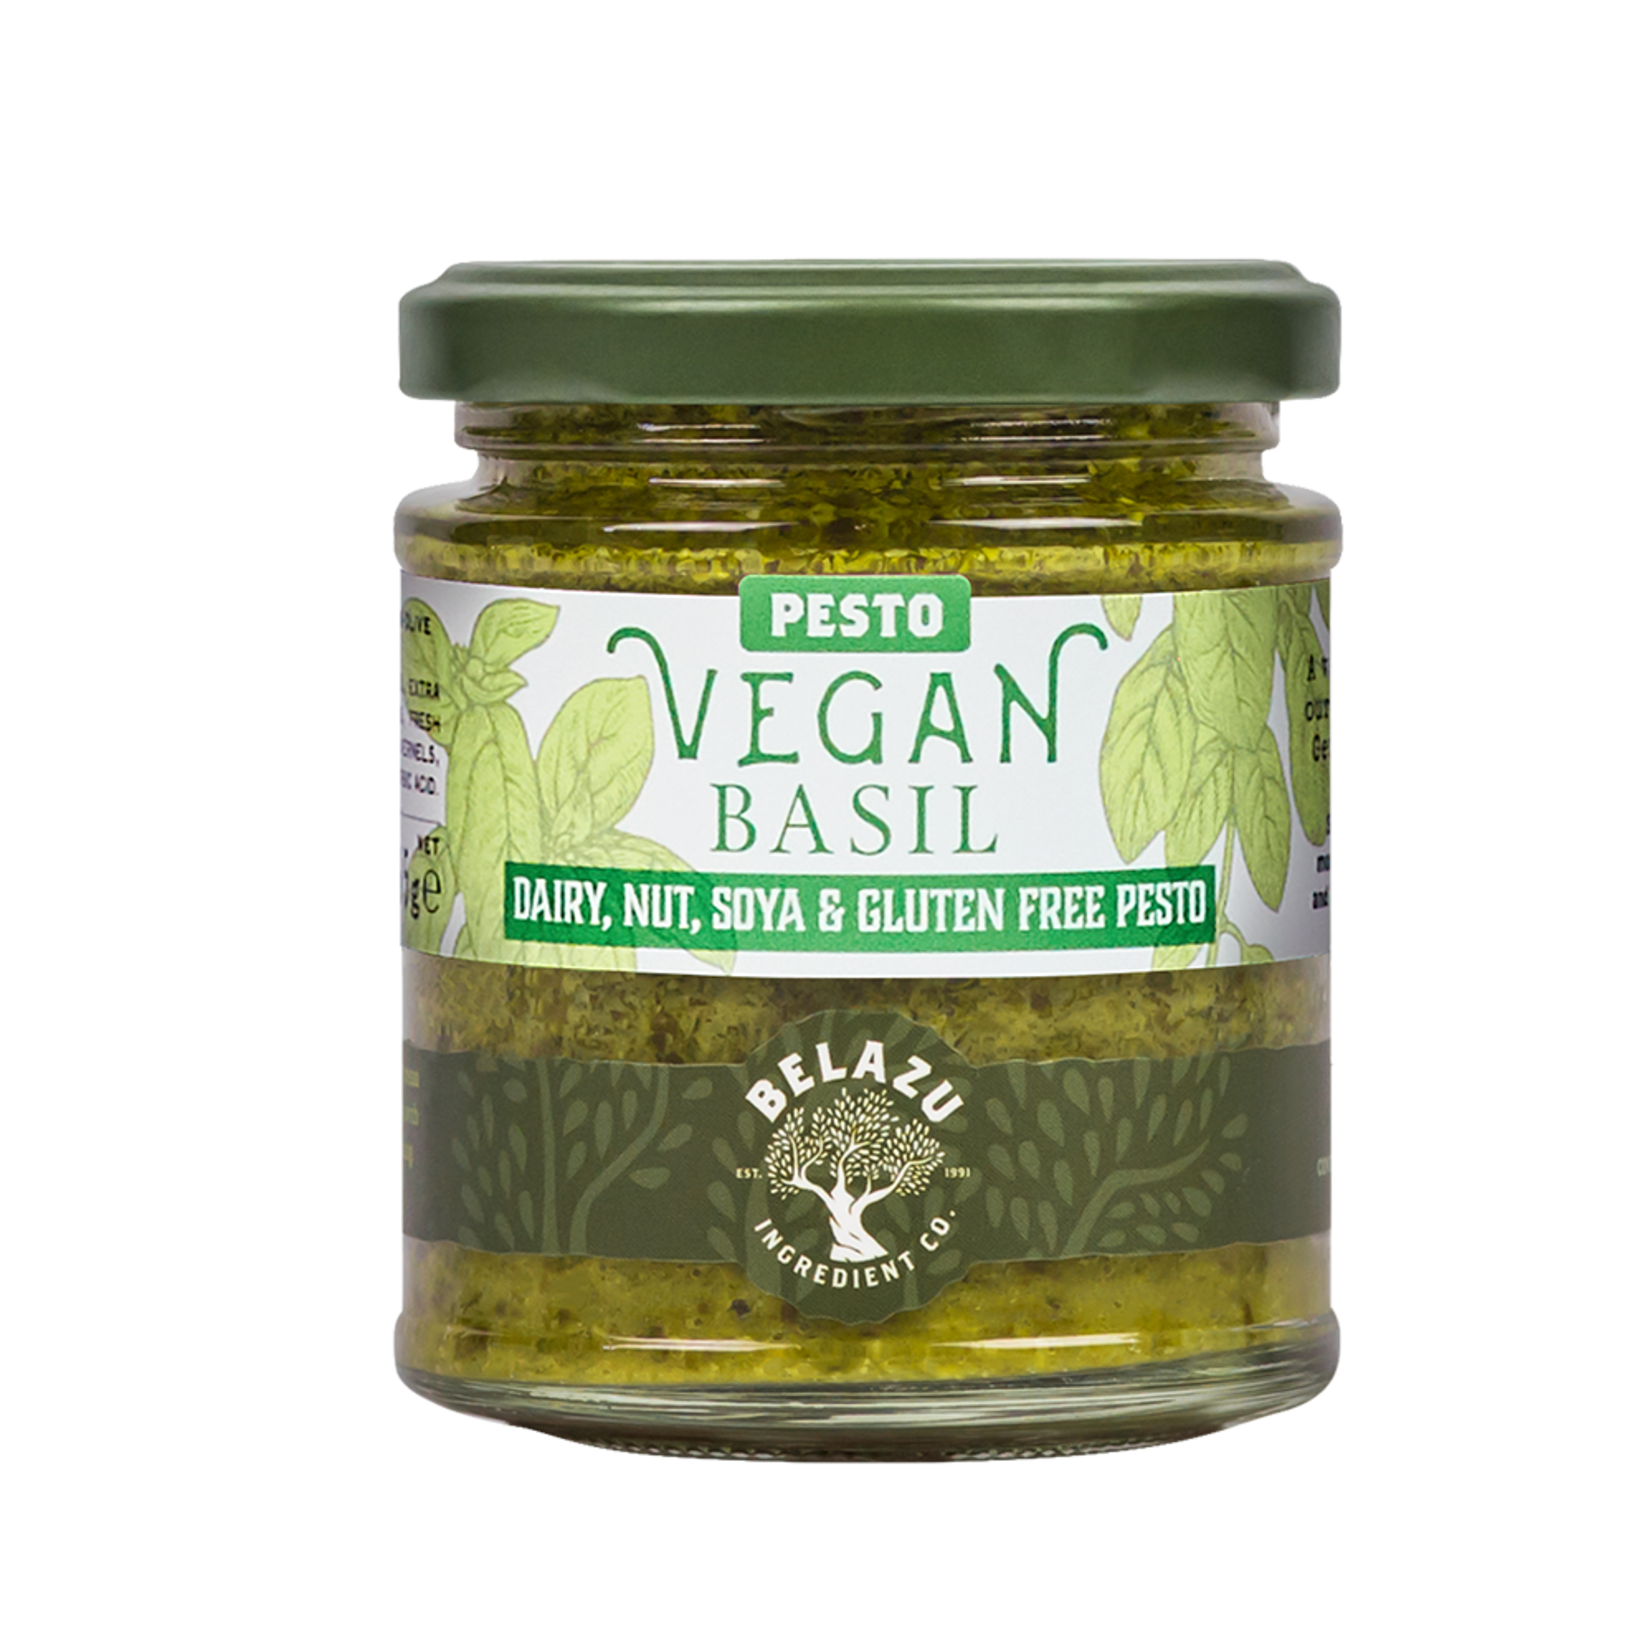 Belazu Vegan Basil Pesto